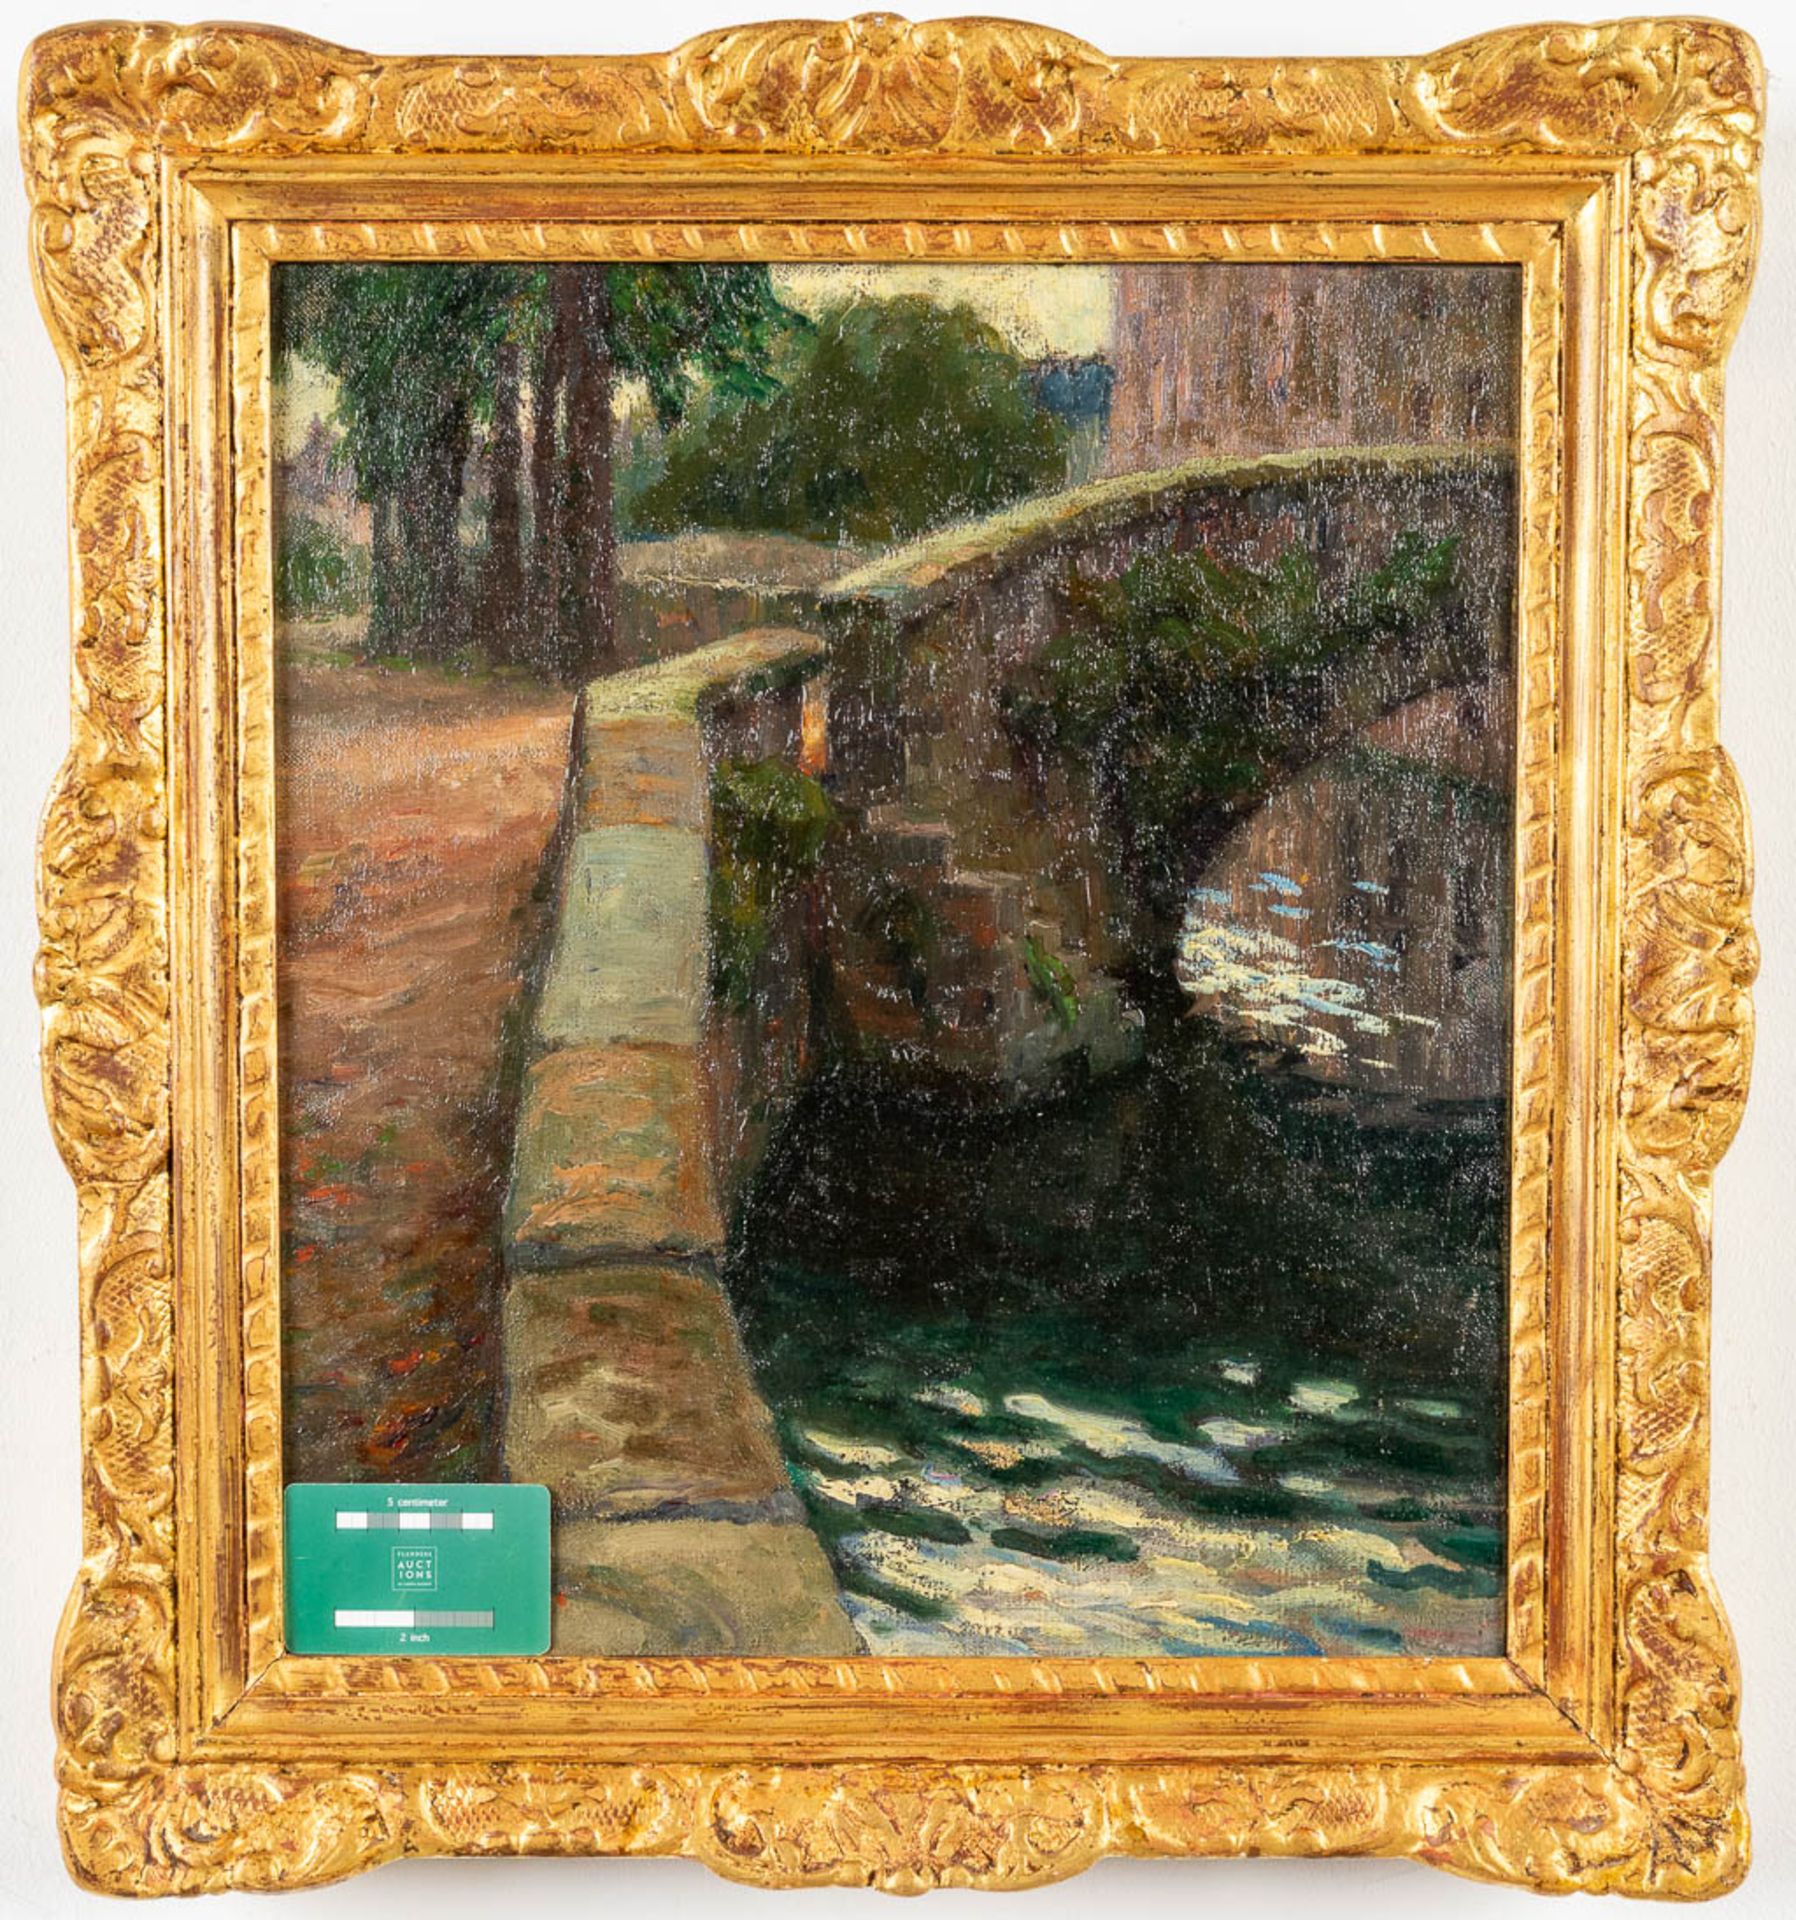 Emile ROMMELAERE (1873-1961) 'Groenerei' oil on canvas. (W: 40 x H: 45 cm) - Image 4 of 6